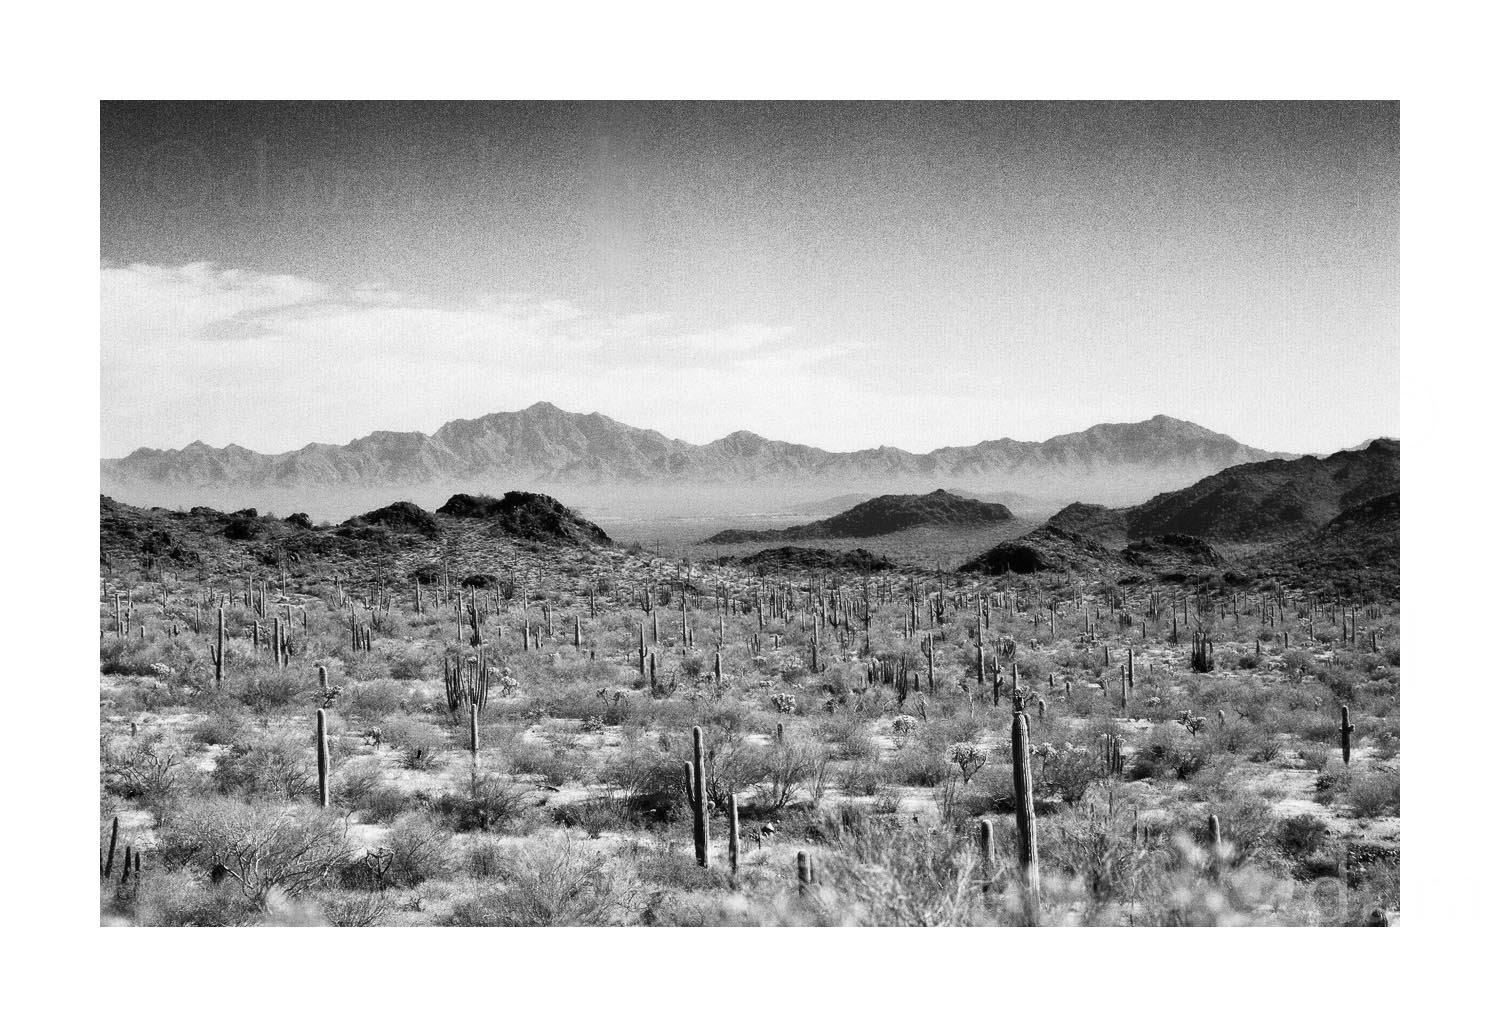 Cactus & Mountains